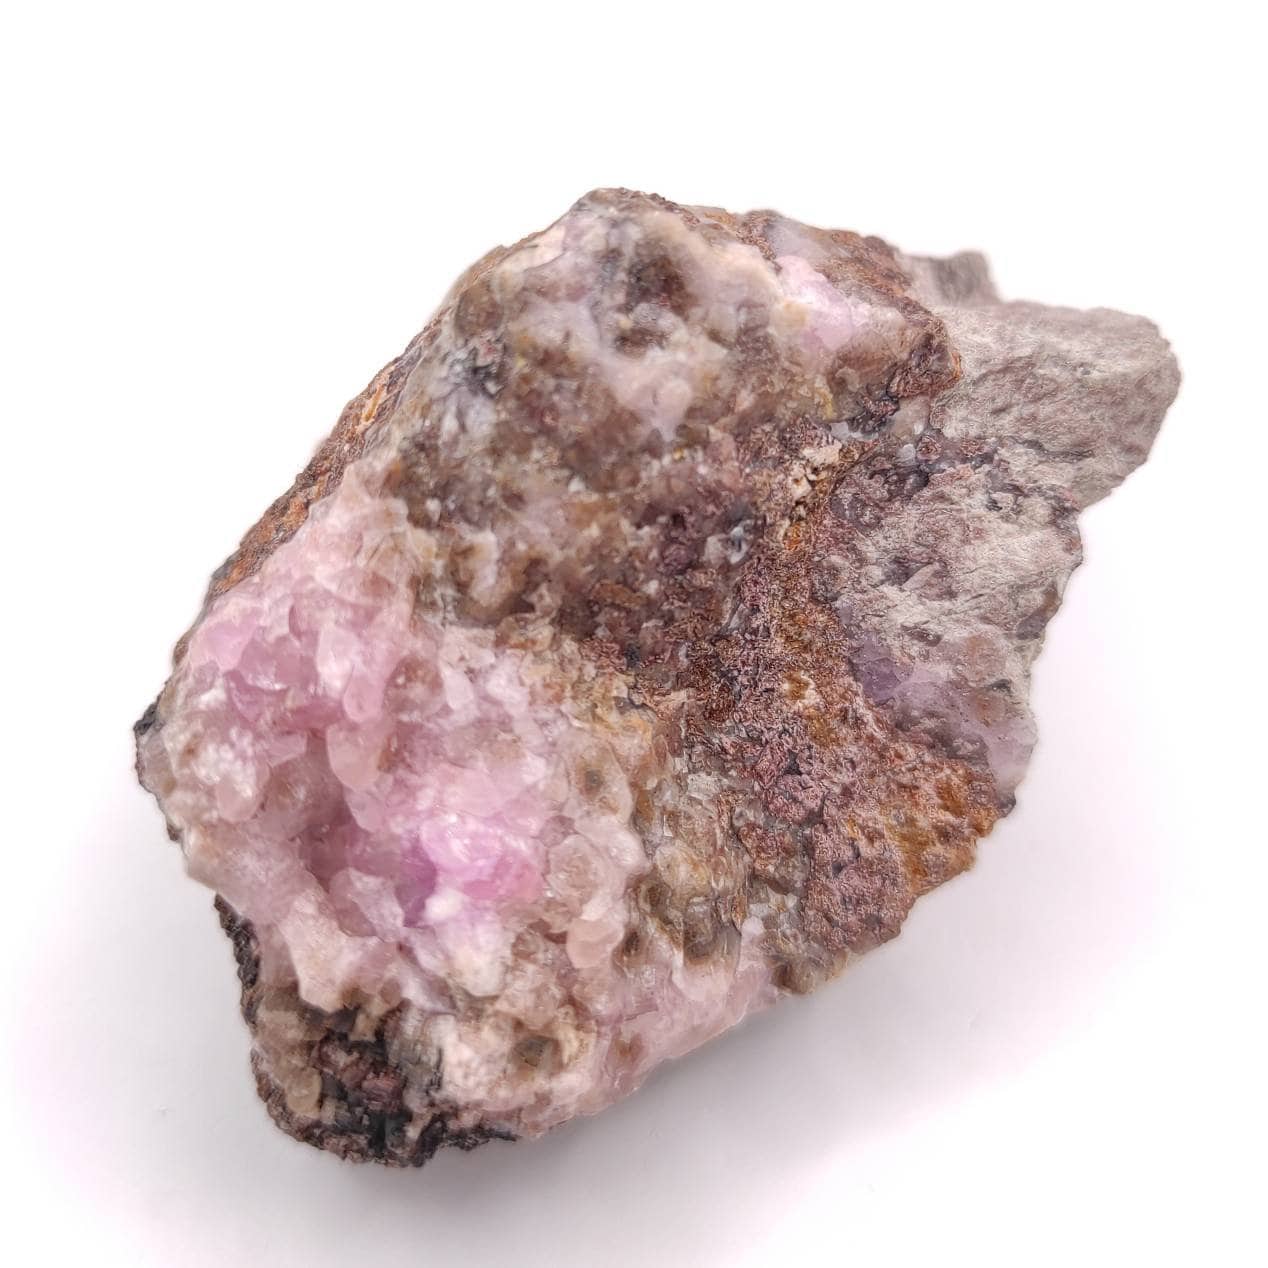 86g Cobaltoan Calcite in Matrix - Natural Pink Calcite Specimen from Morocco - Rough Cobalt Calcite - Natural Cobalto Calcite Crystal Gem